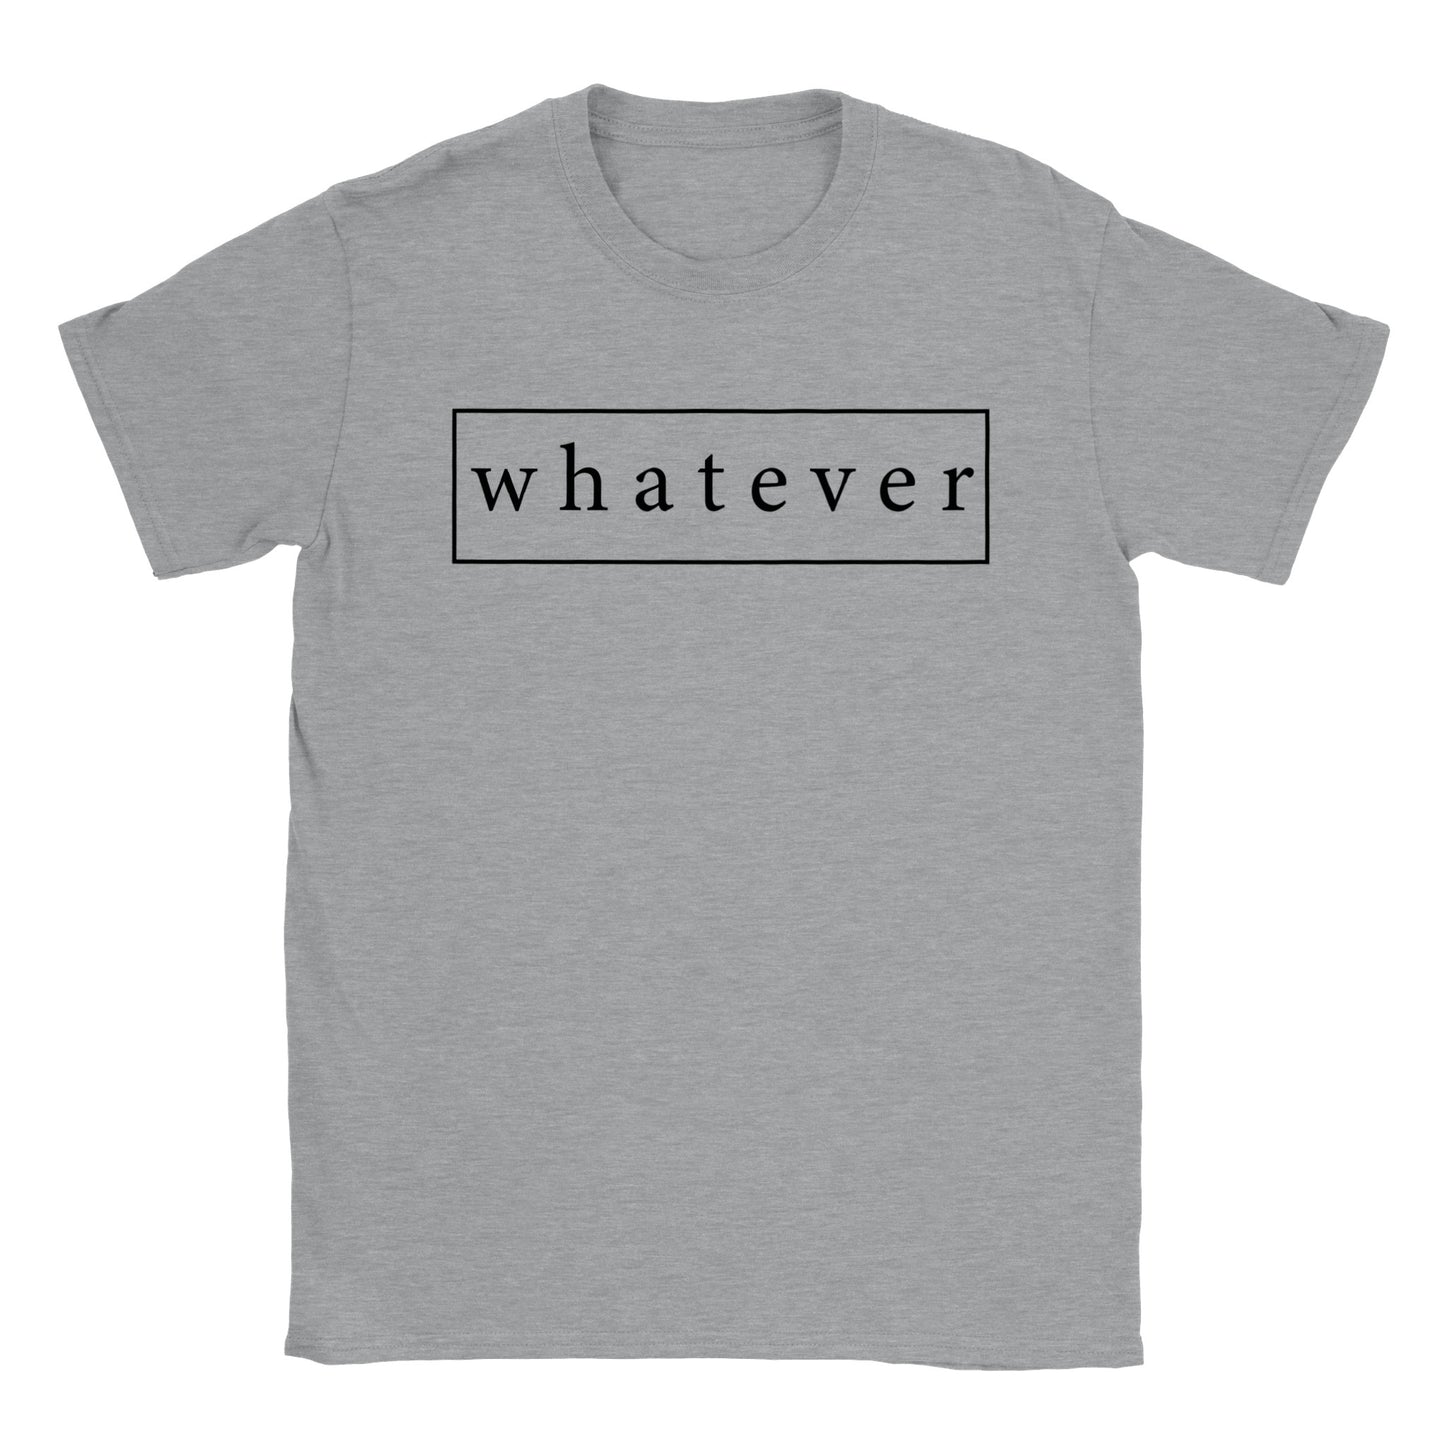 Whatever - Classic Unisex Crewneck T-shirt - Mister Snarky's